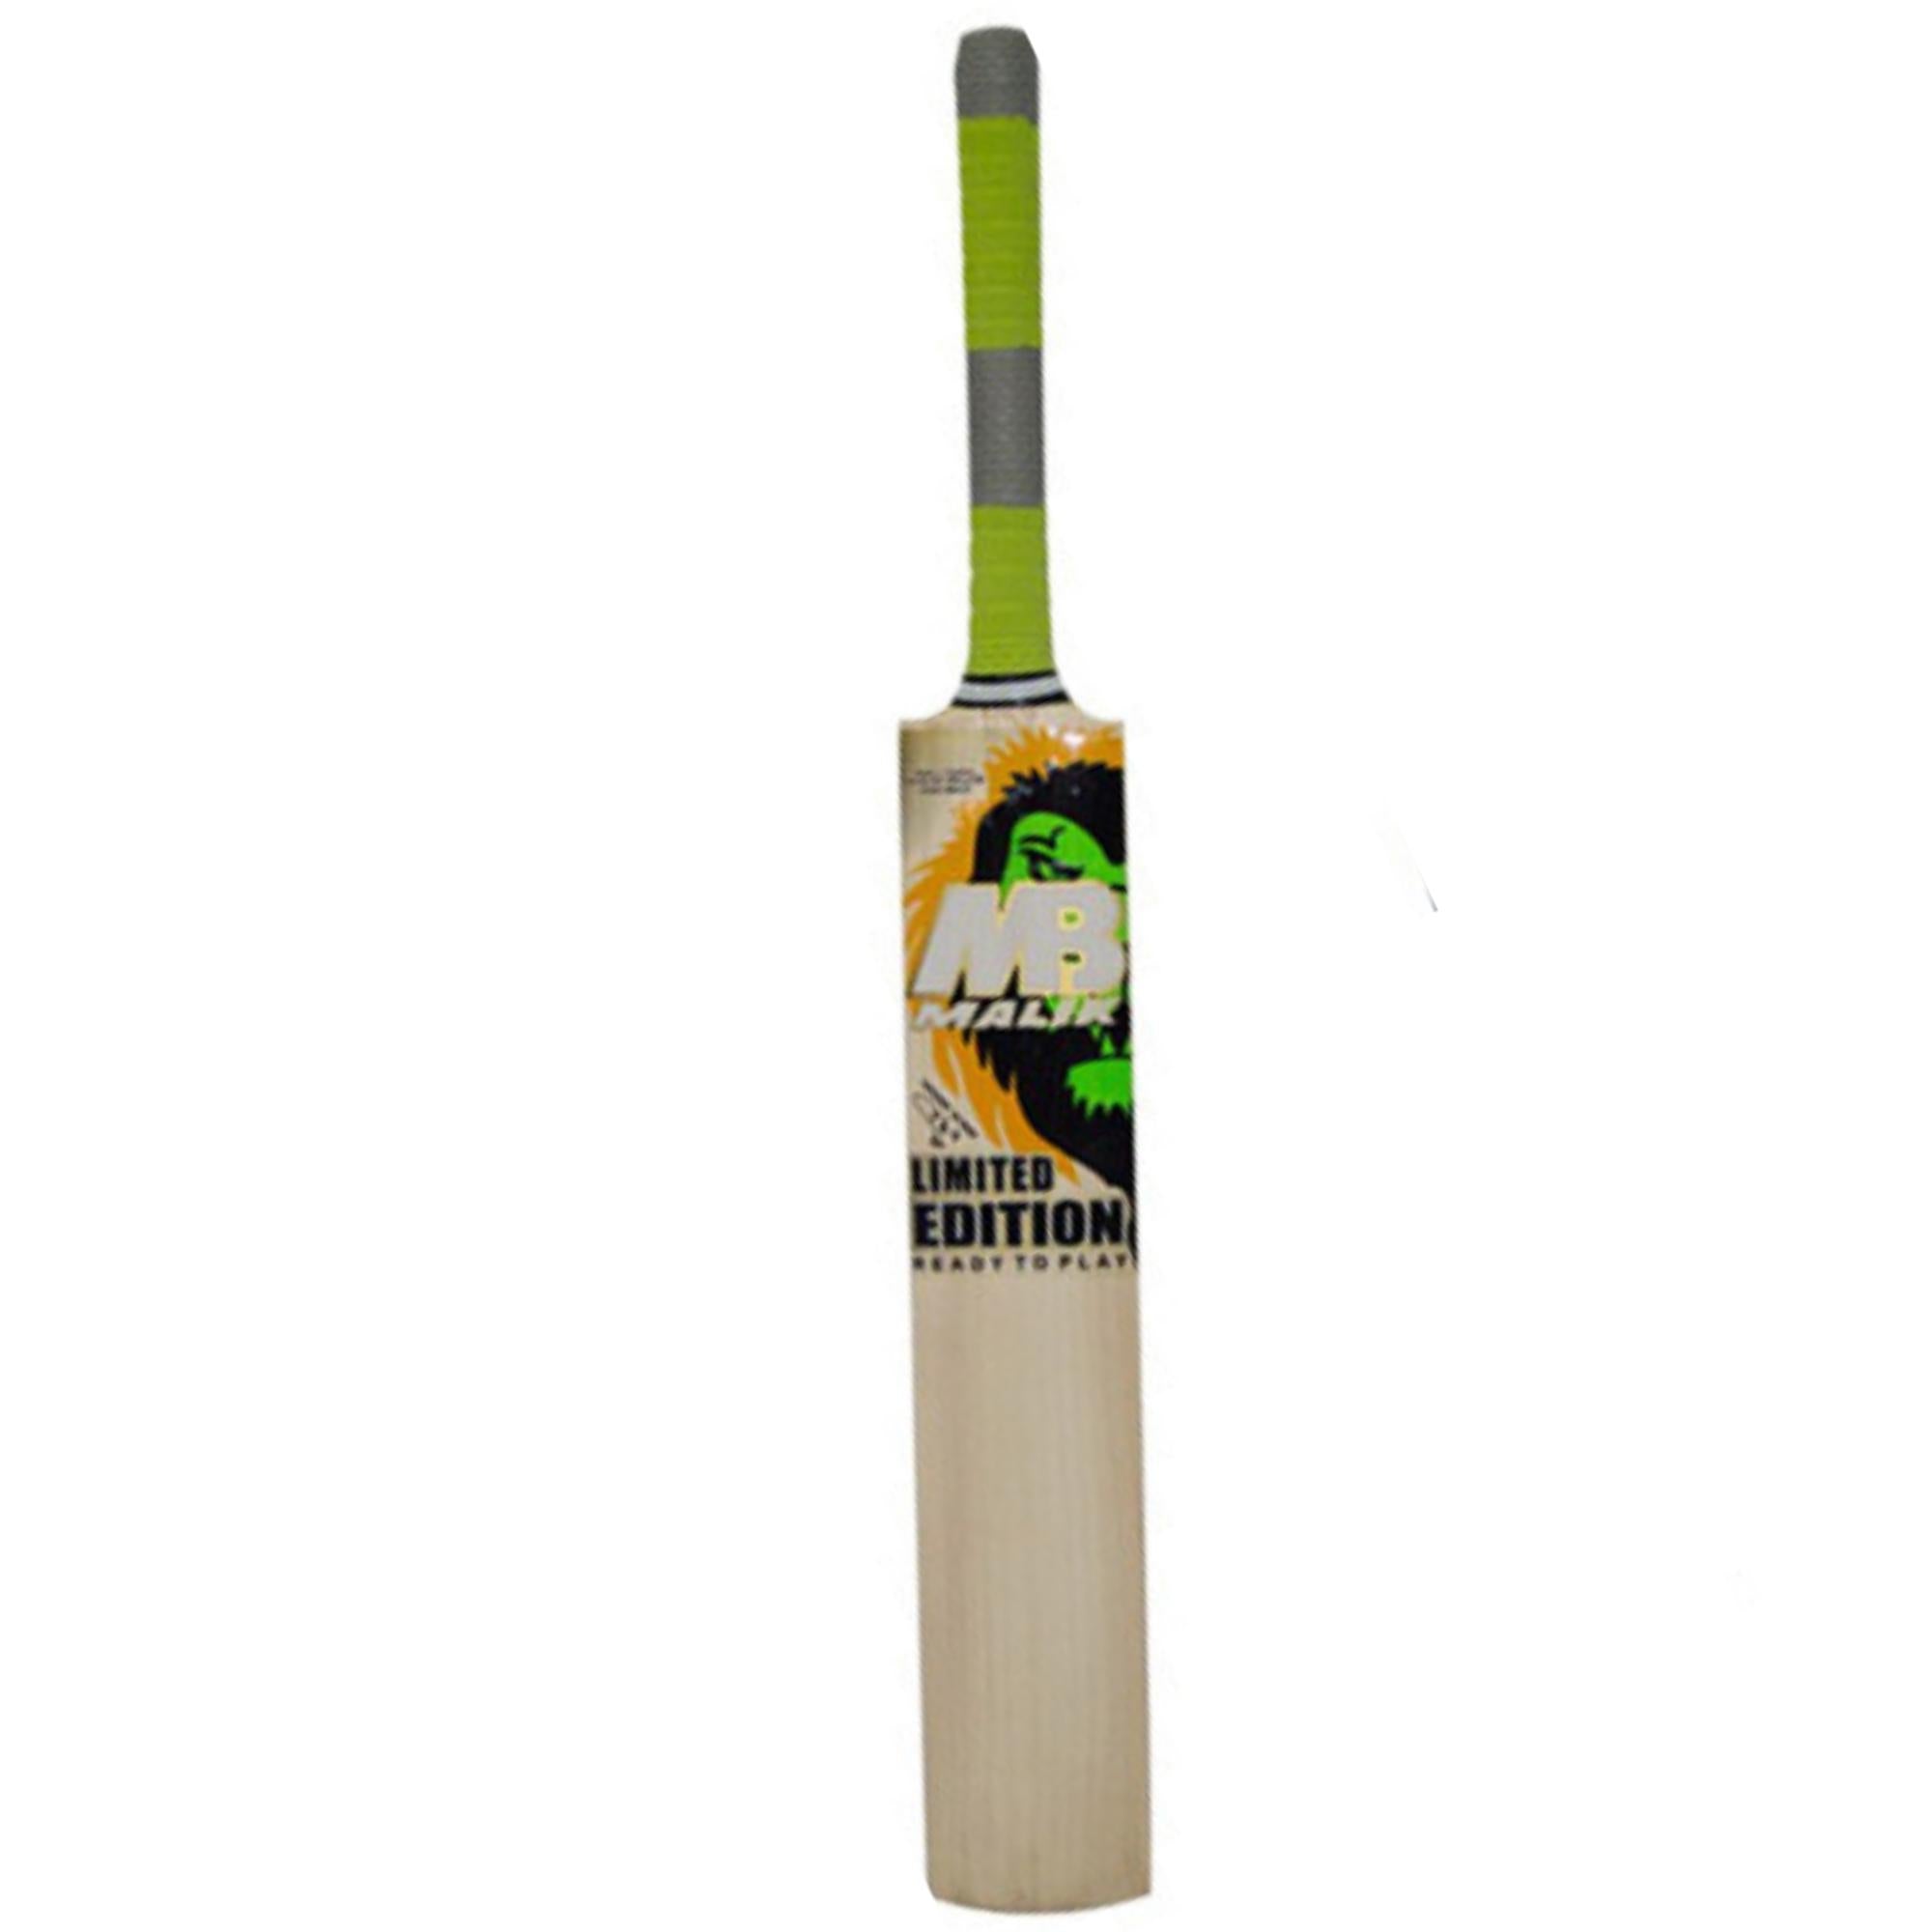 MB Malik Limited Edition Big Edge Cricket Bat